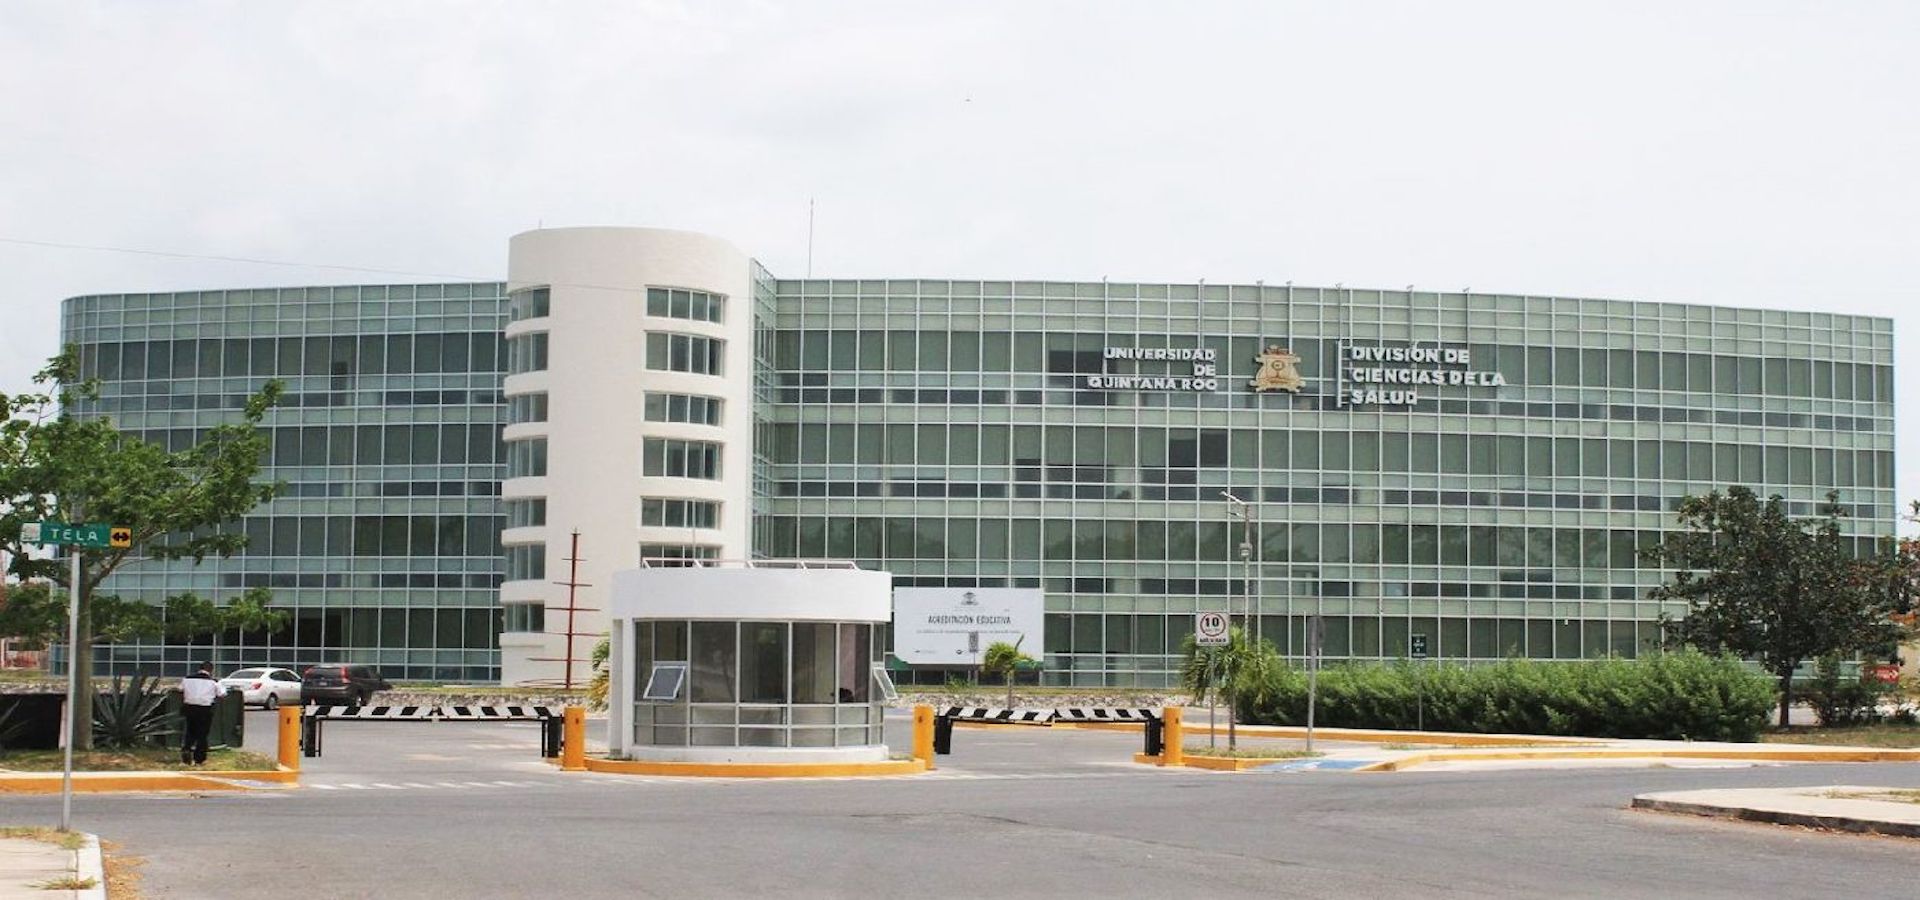 Universidad Autónoma del Estado de Quintana Roo